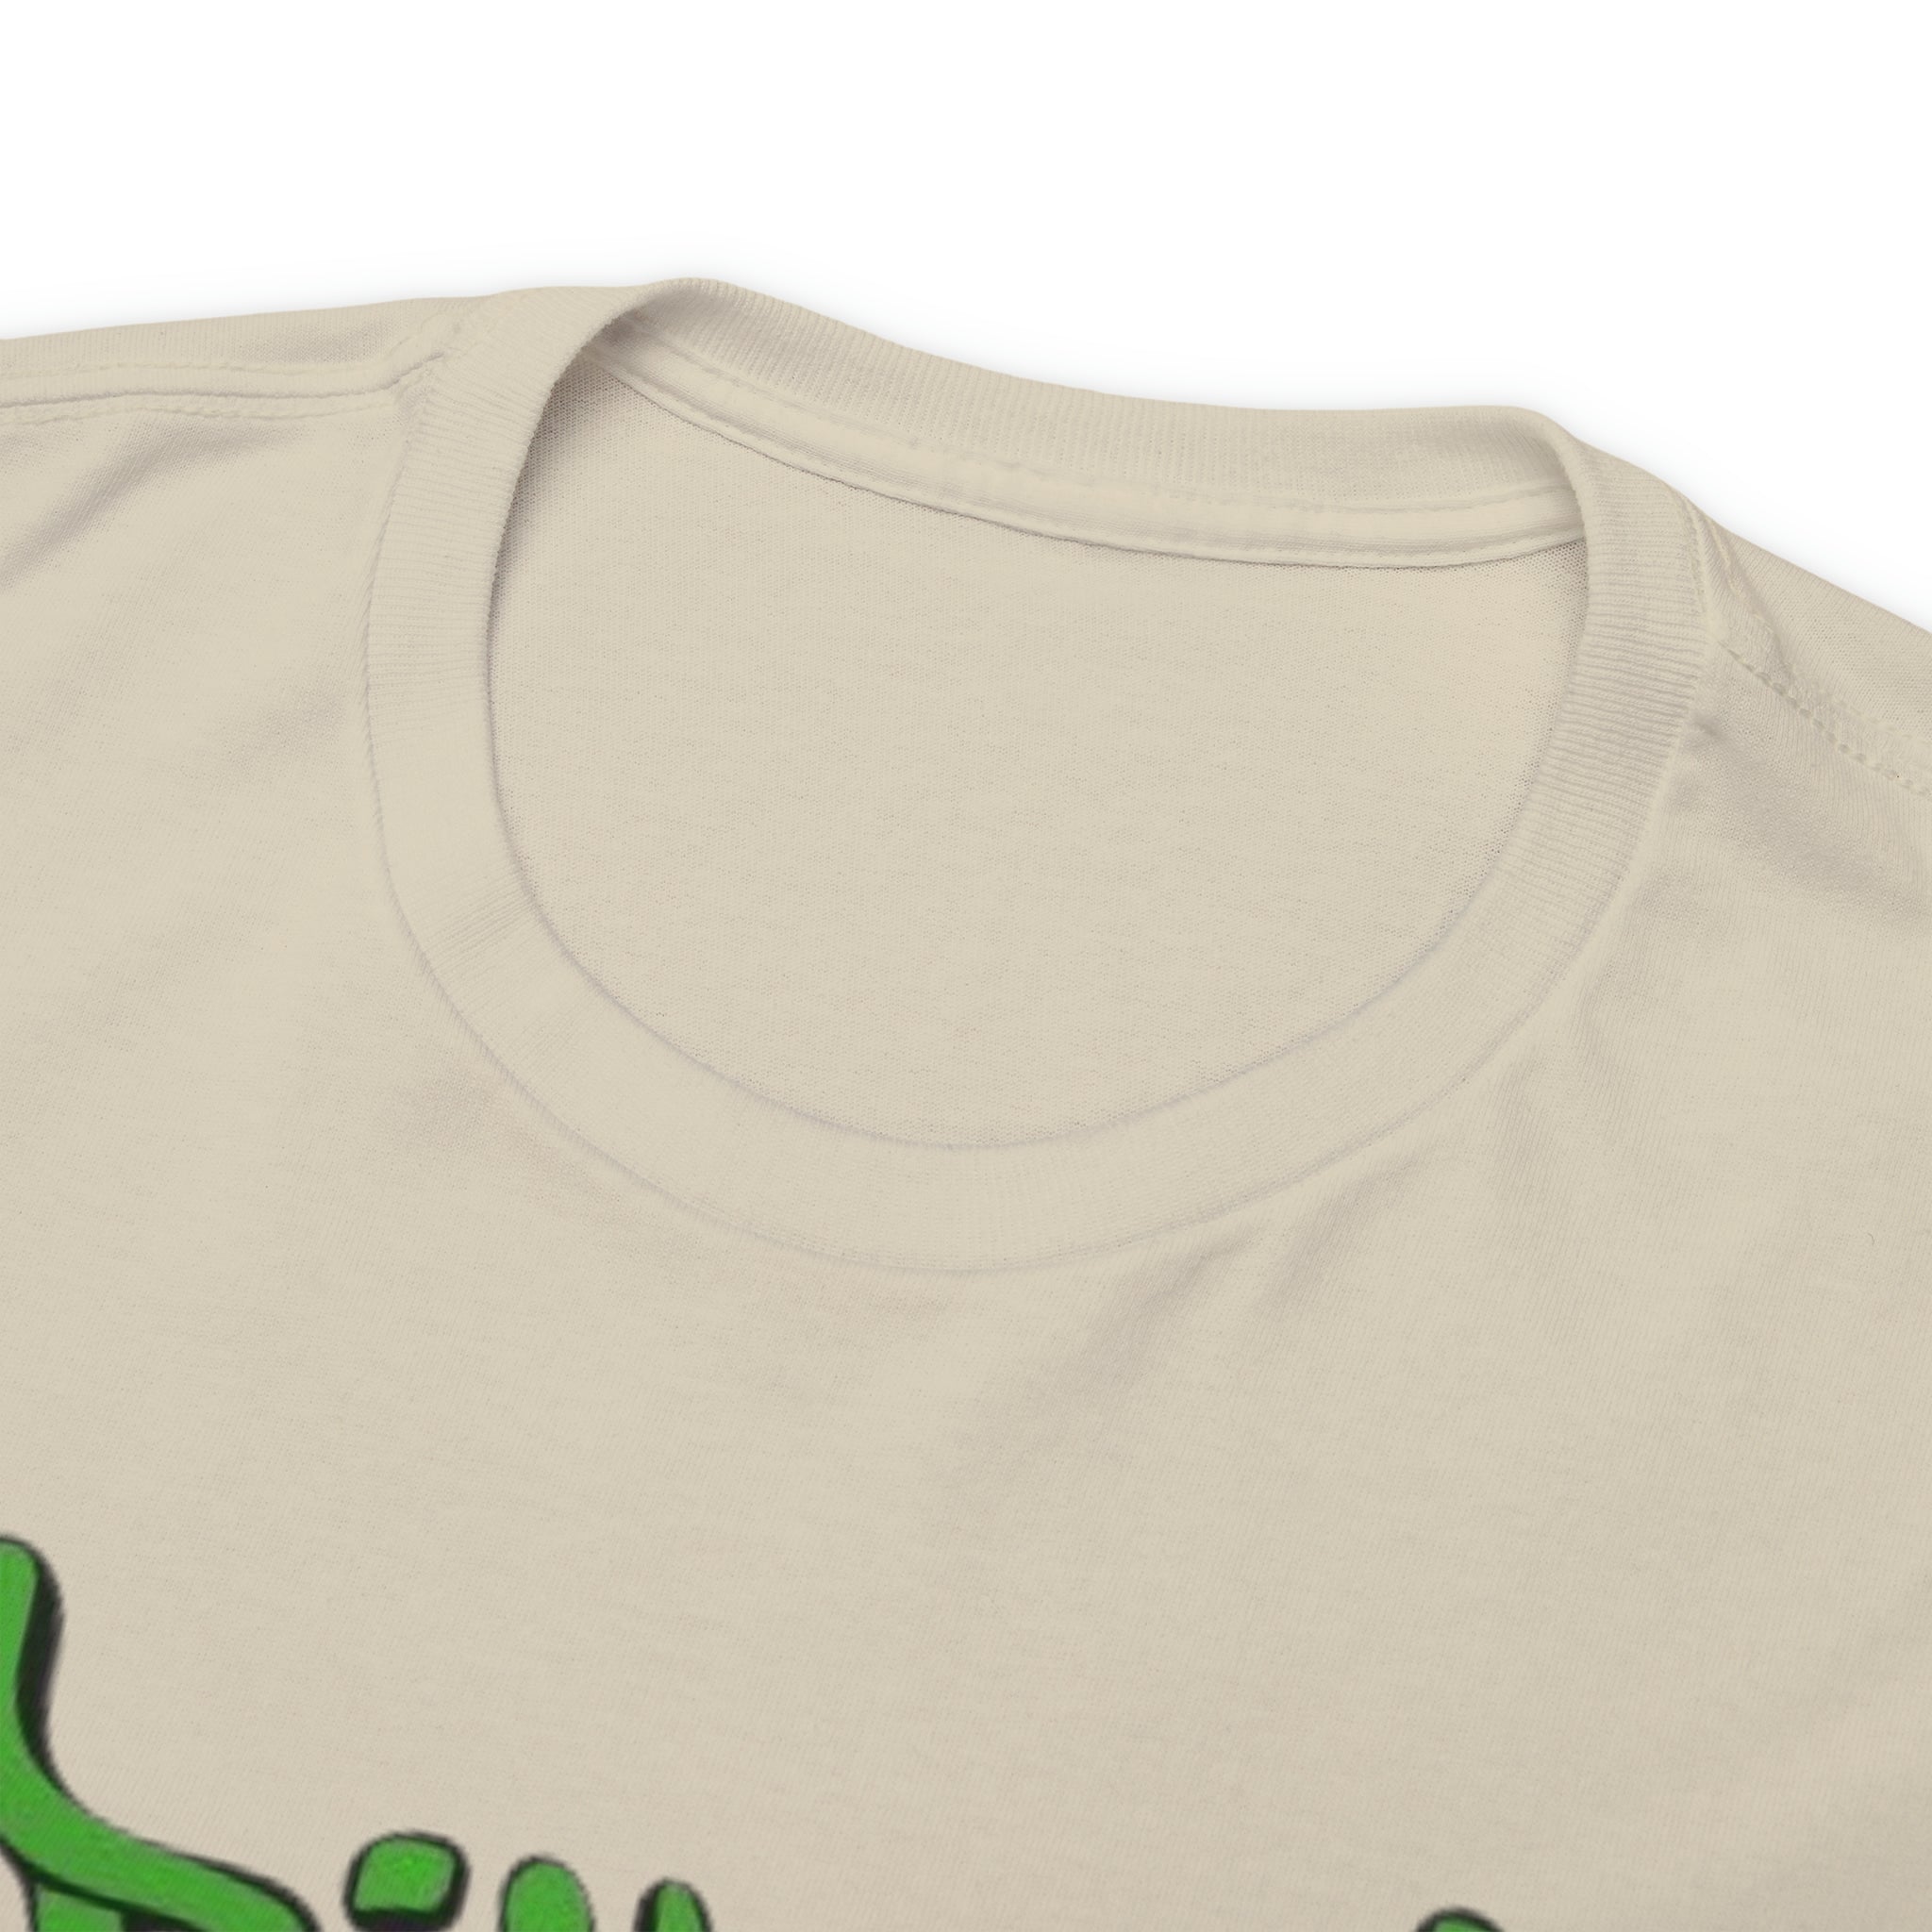 Billie Eilish Unisex T-Shirt | Fan Merch